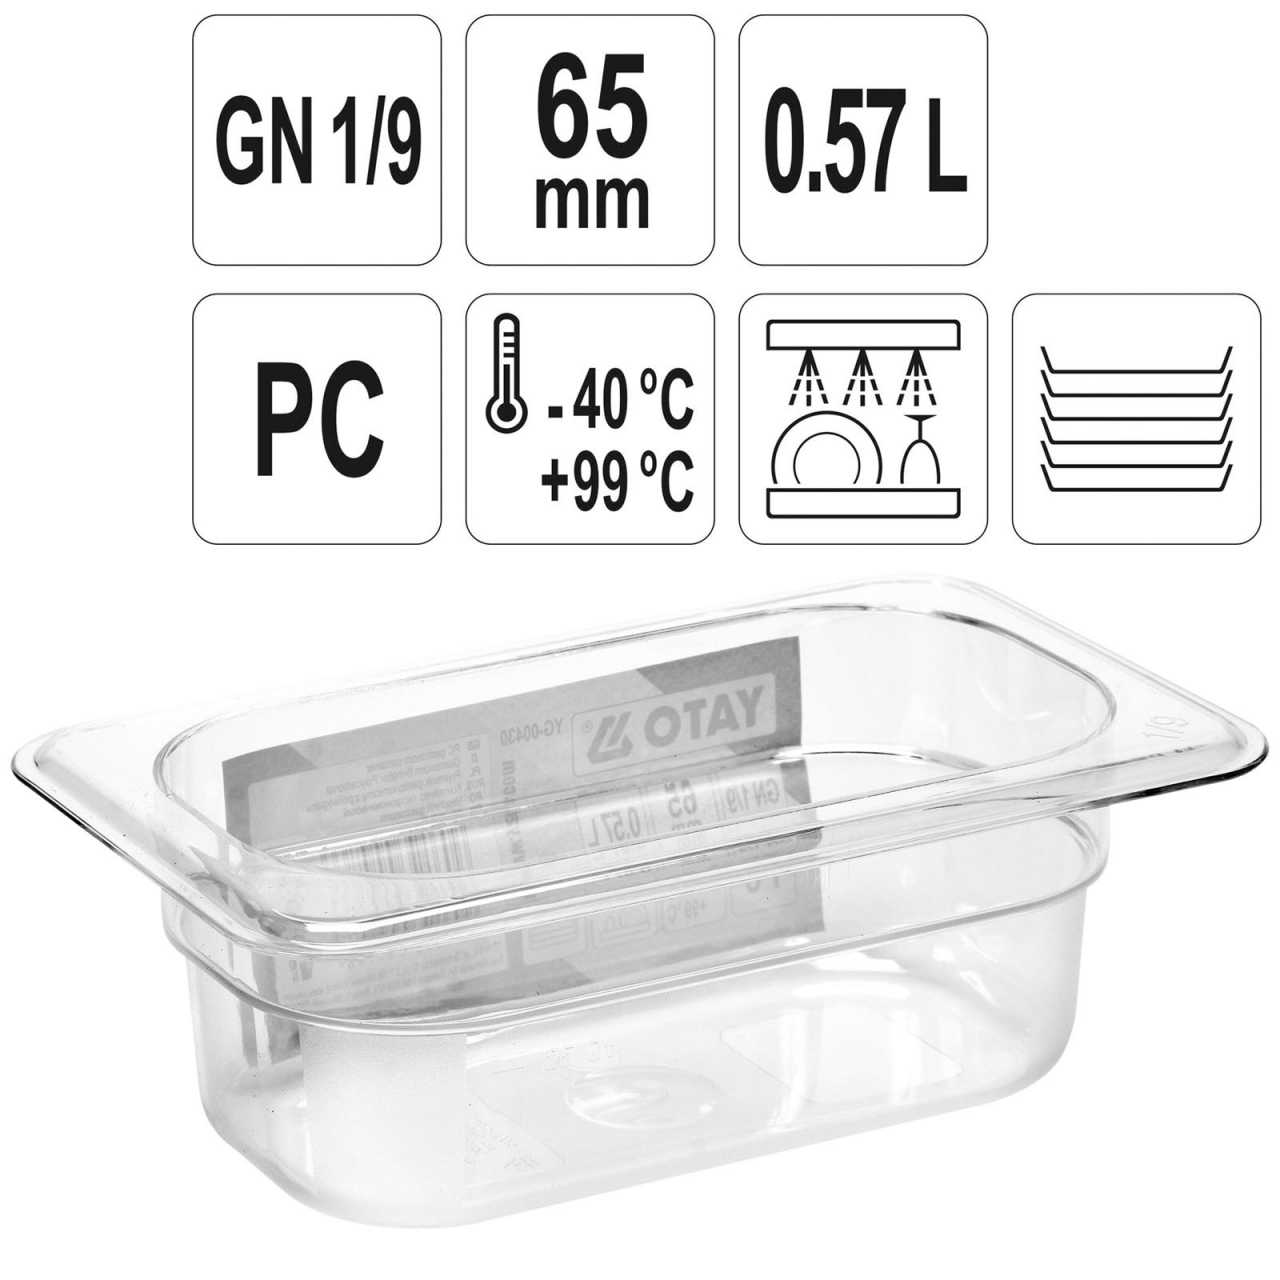 YATO Profi GN Gastronorm Behälter Kunststoff 1/9 65mm YG-00430